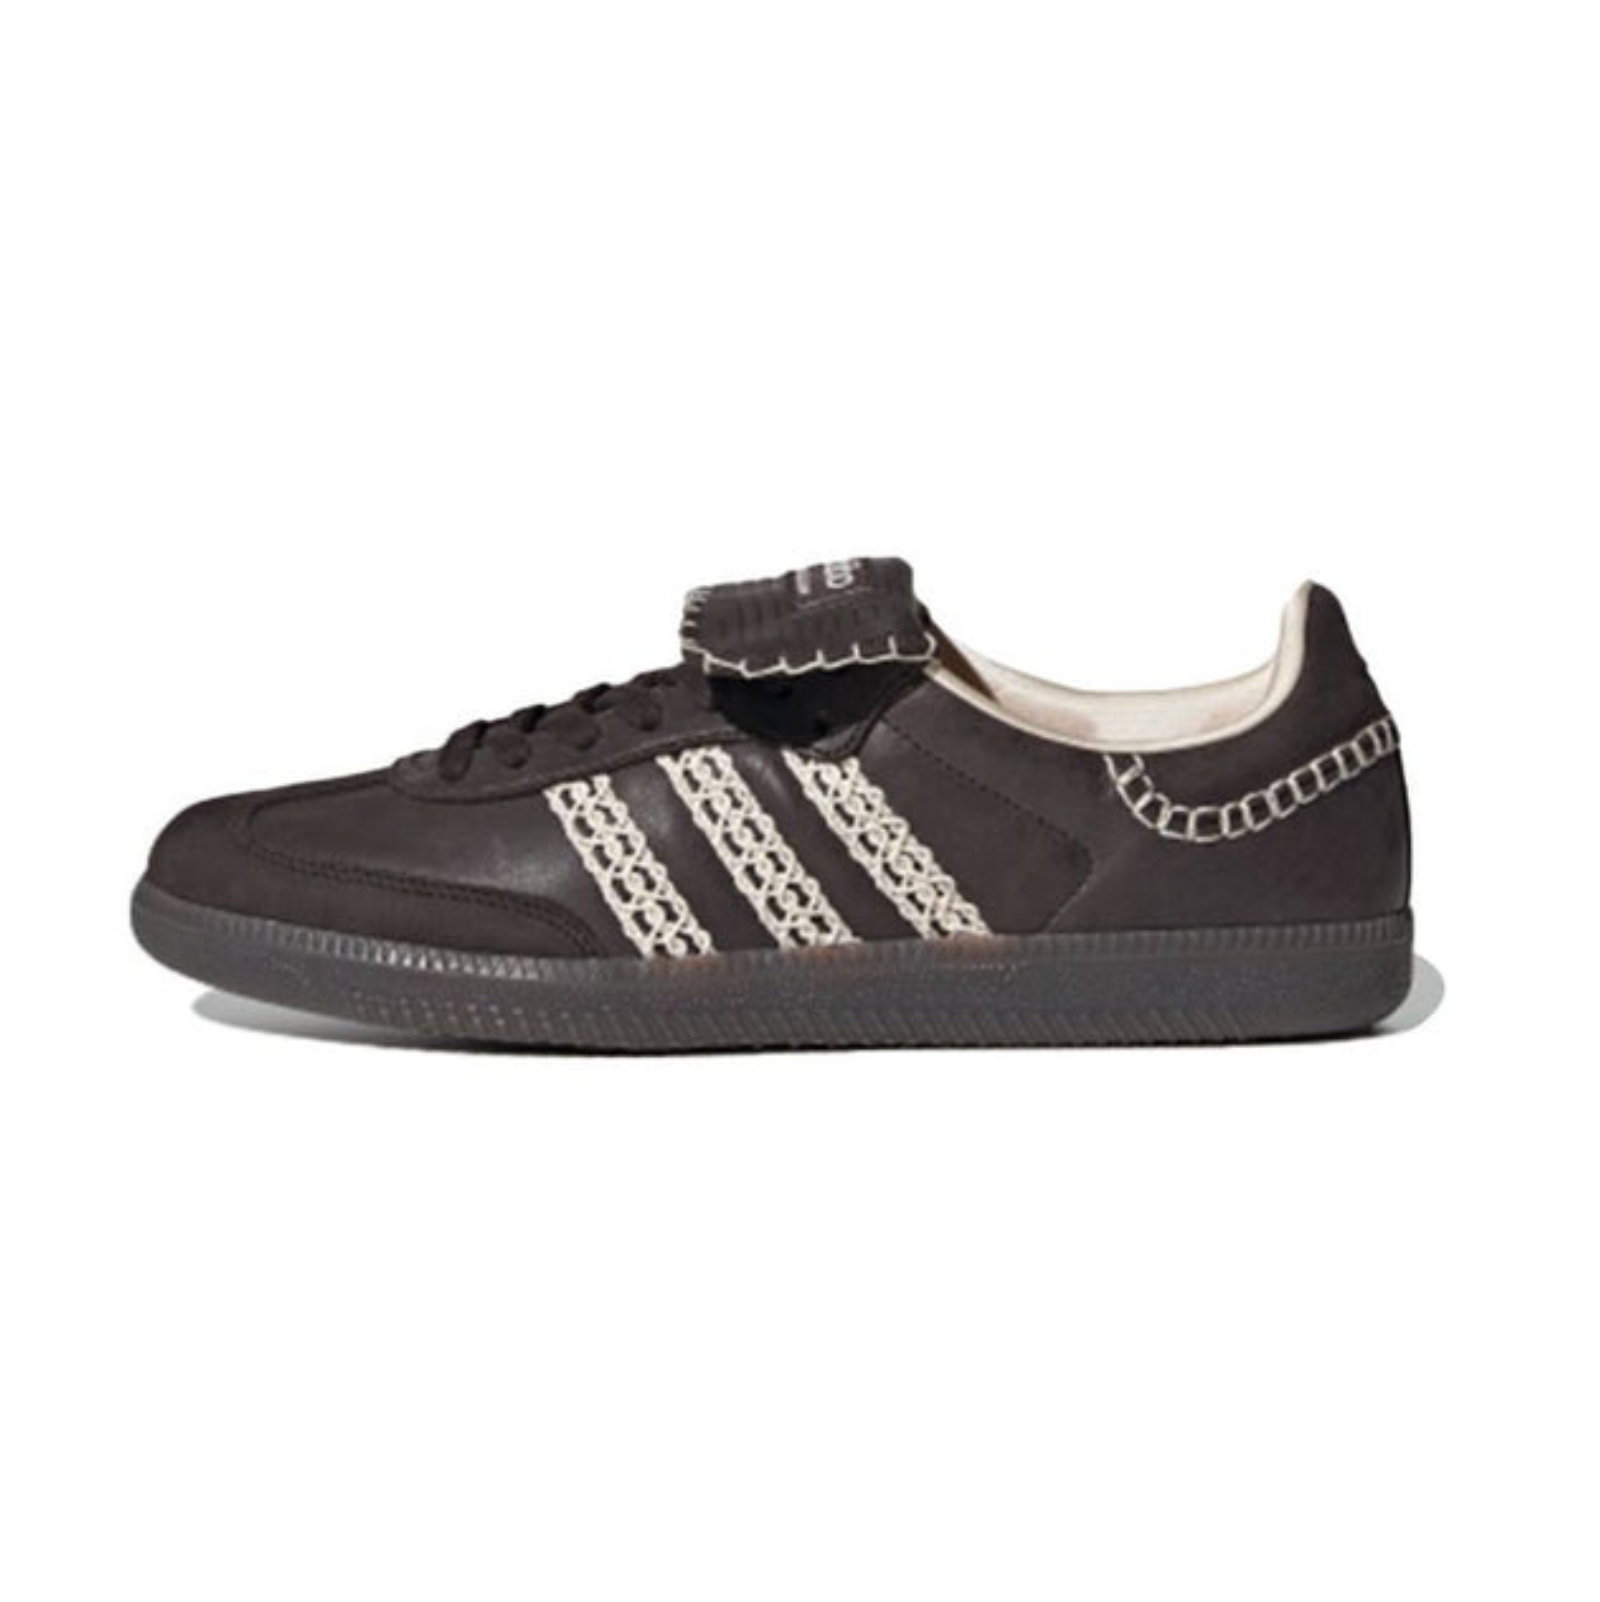 Adidas x Wales Bonner Samba Sneakers in black | RADPRESENT